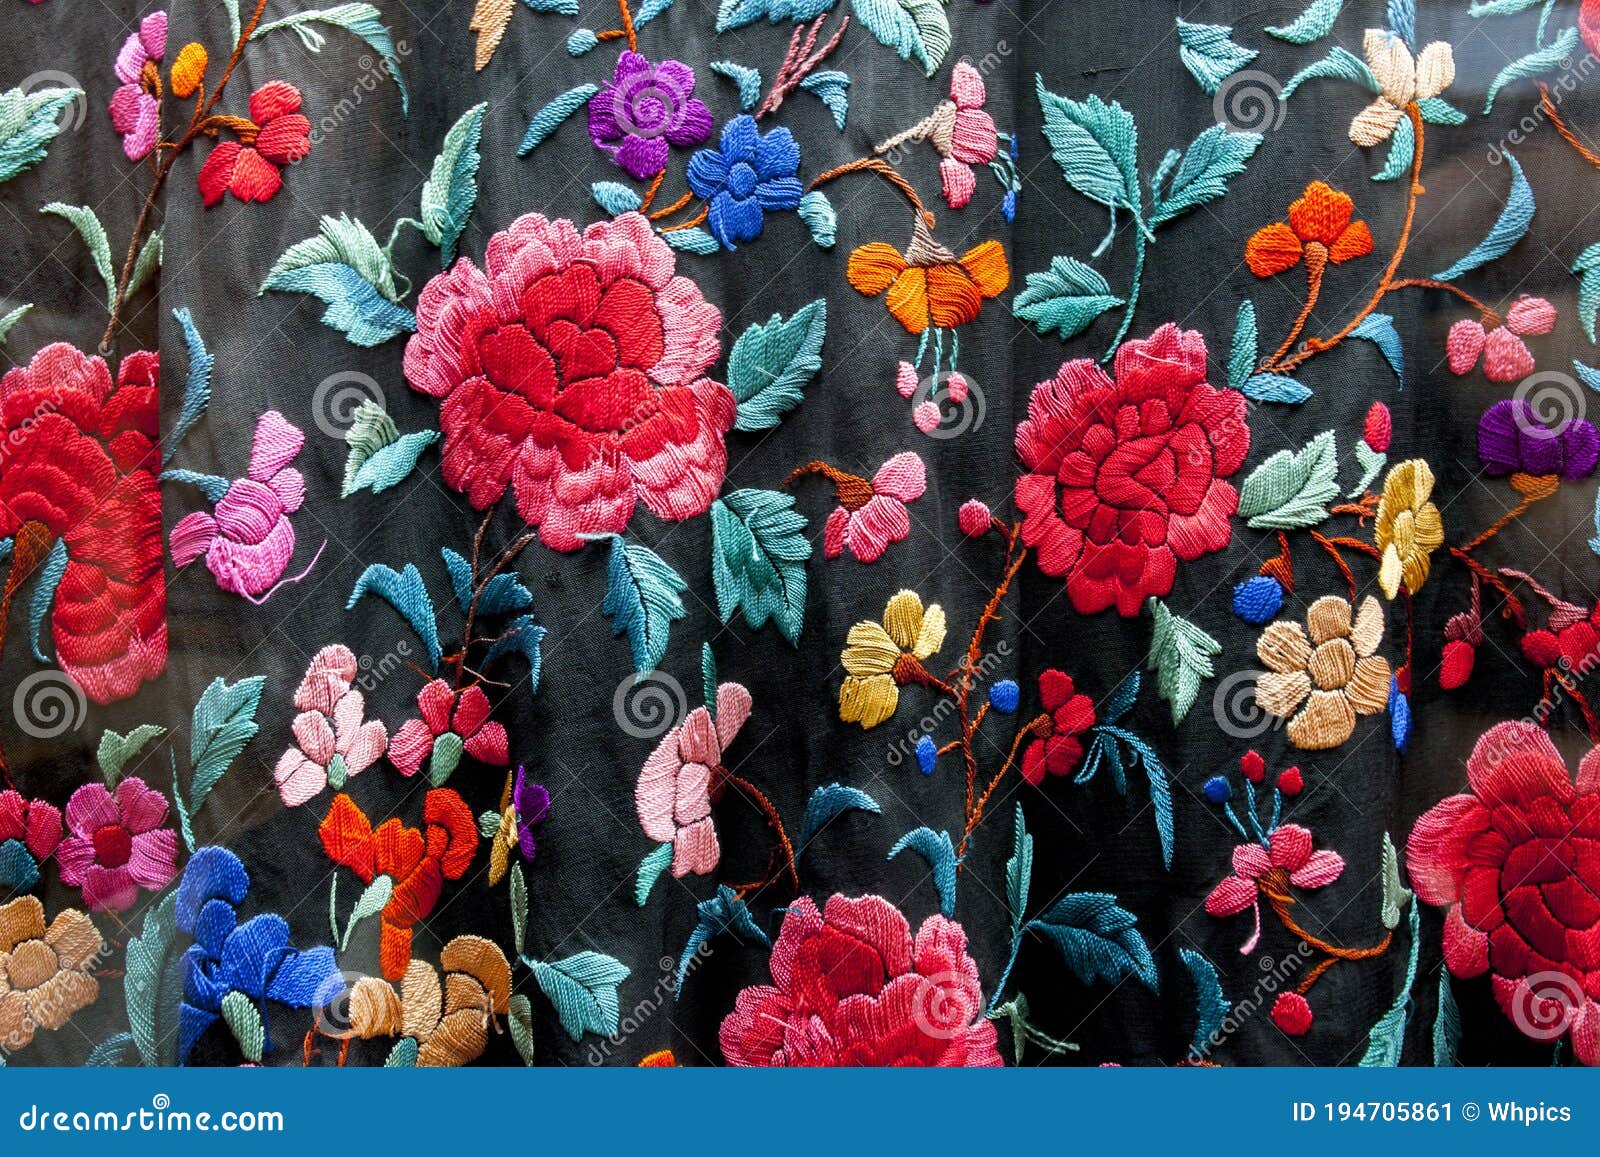 manila shawl, embroidered silk shawl originating from china